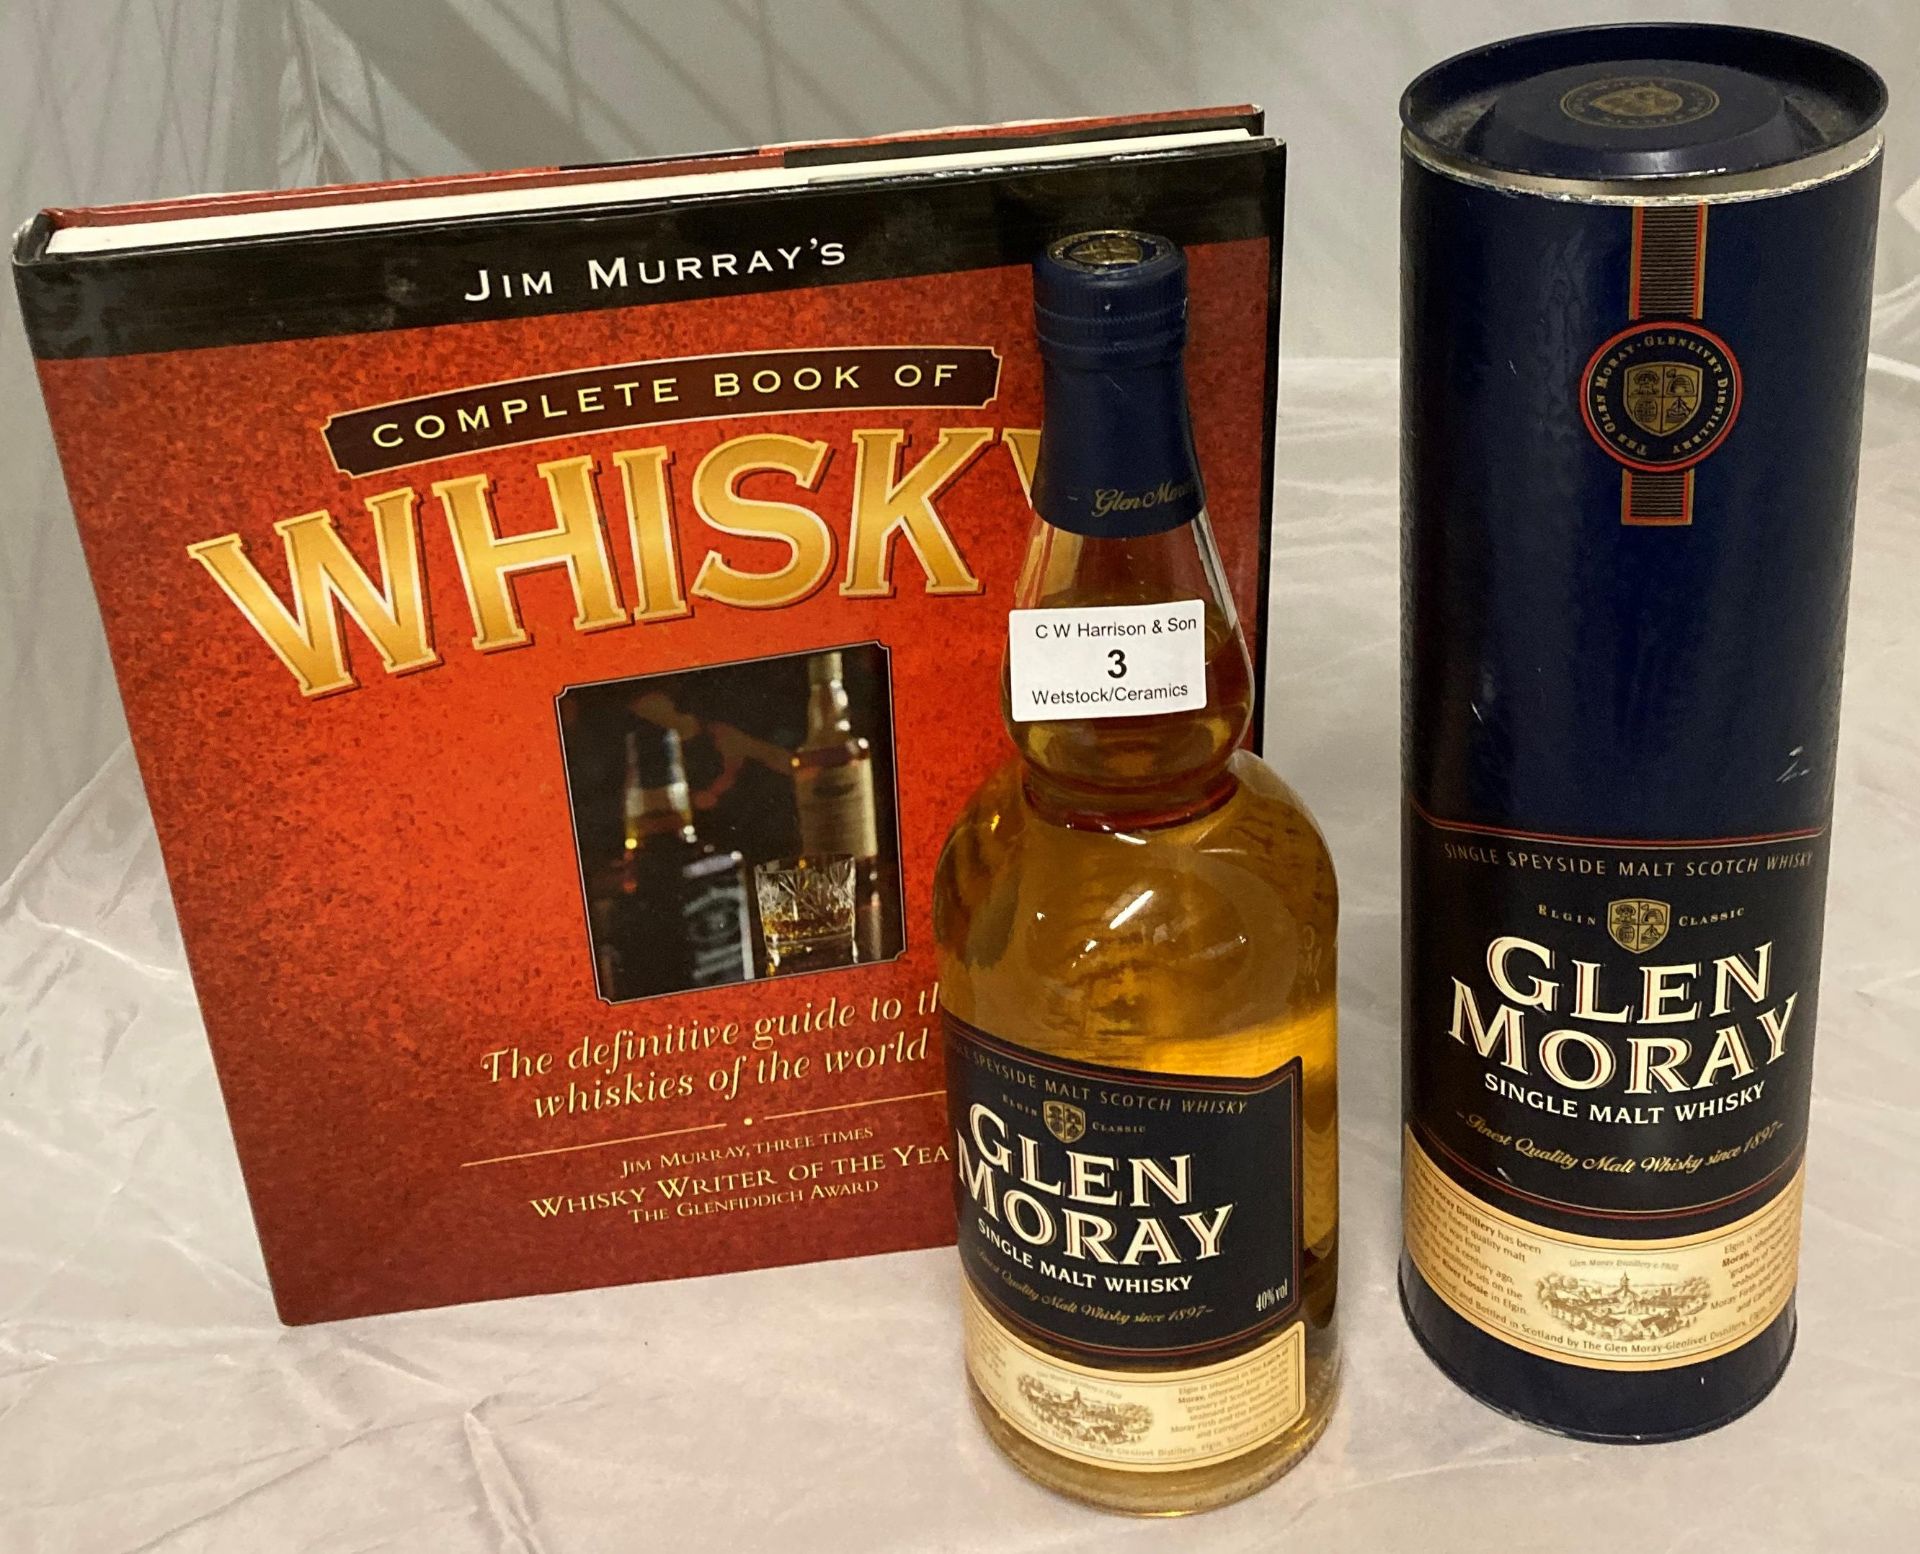 A 70cl bottle of Glen Moray Single Malt Whisky 40% volume in presentation canister and Jim Murray's